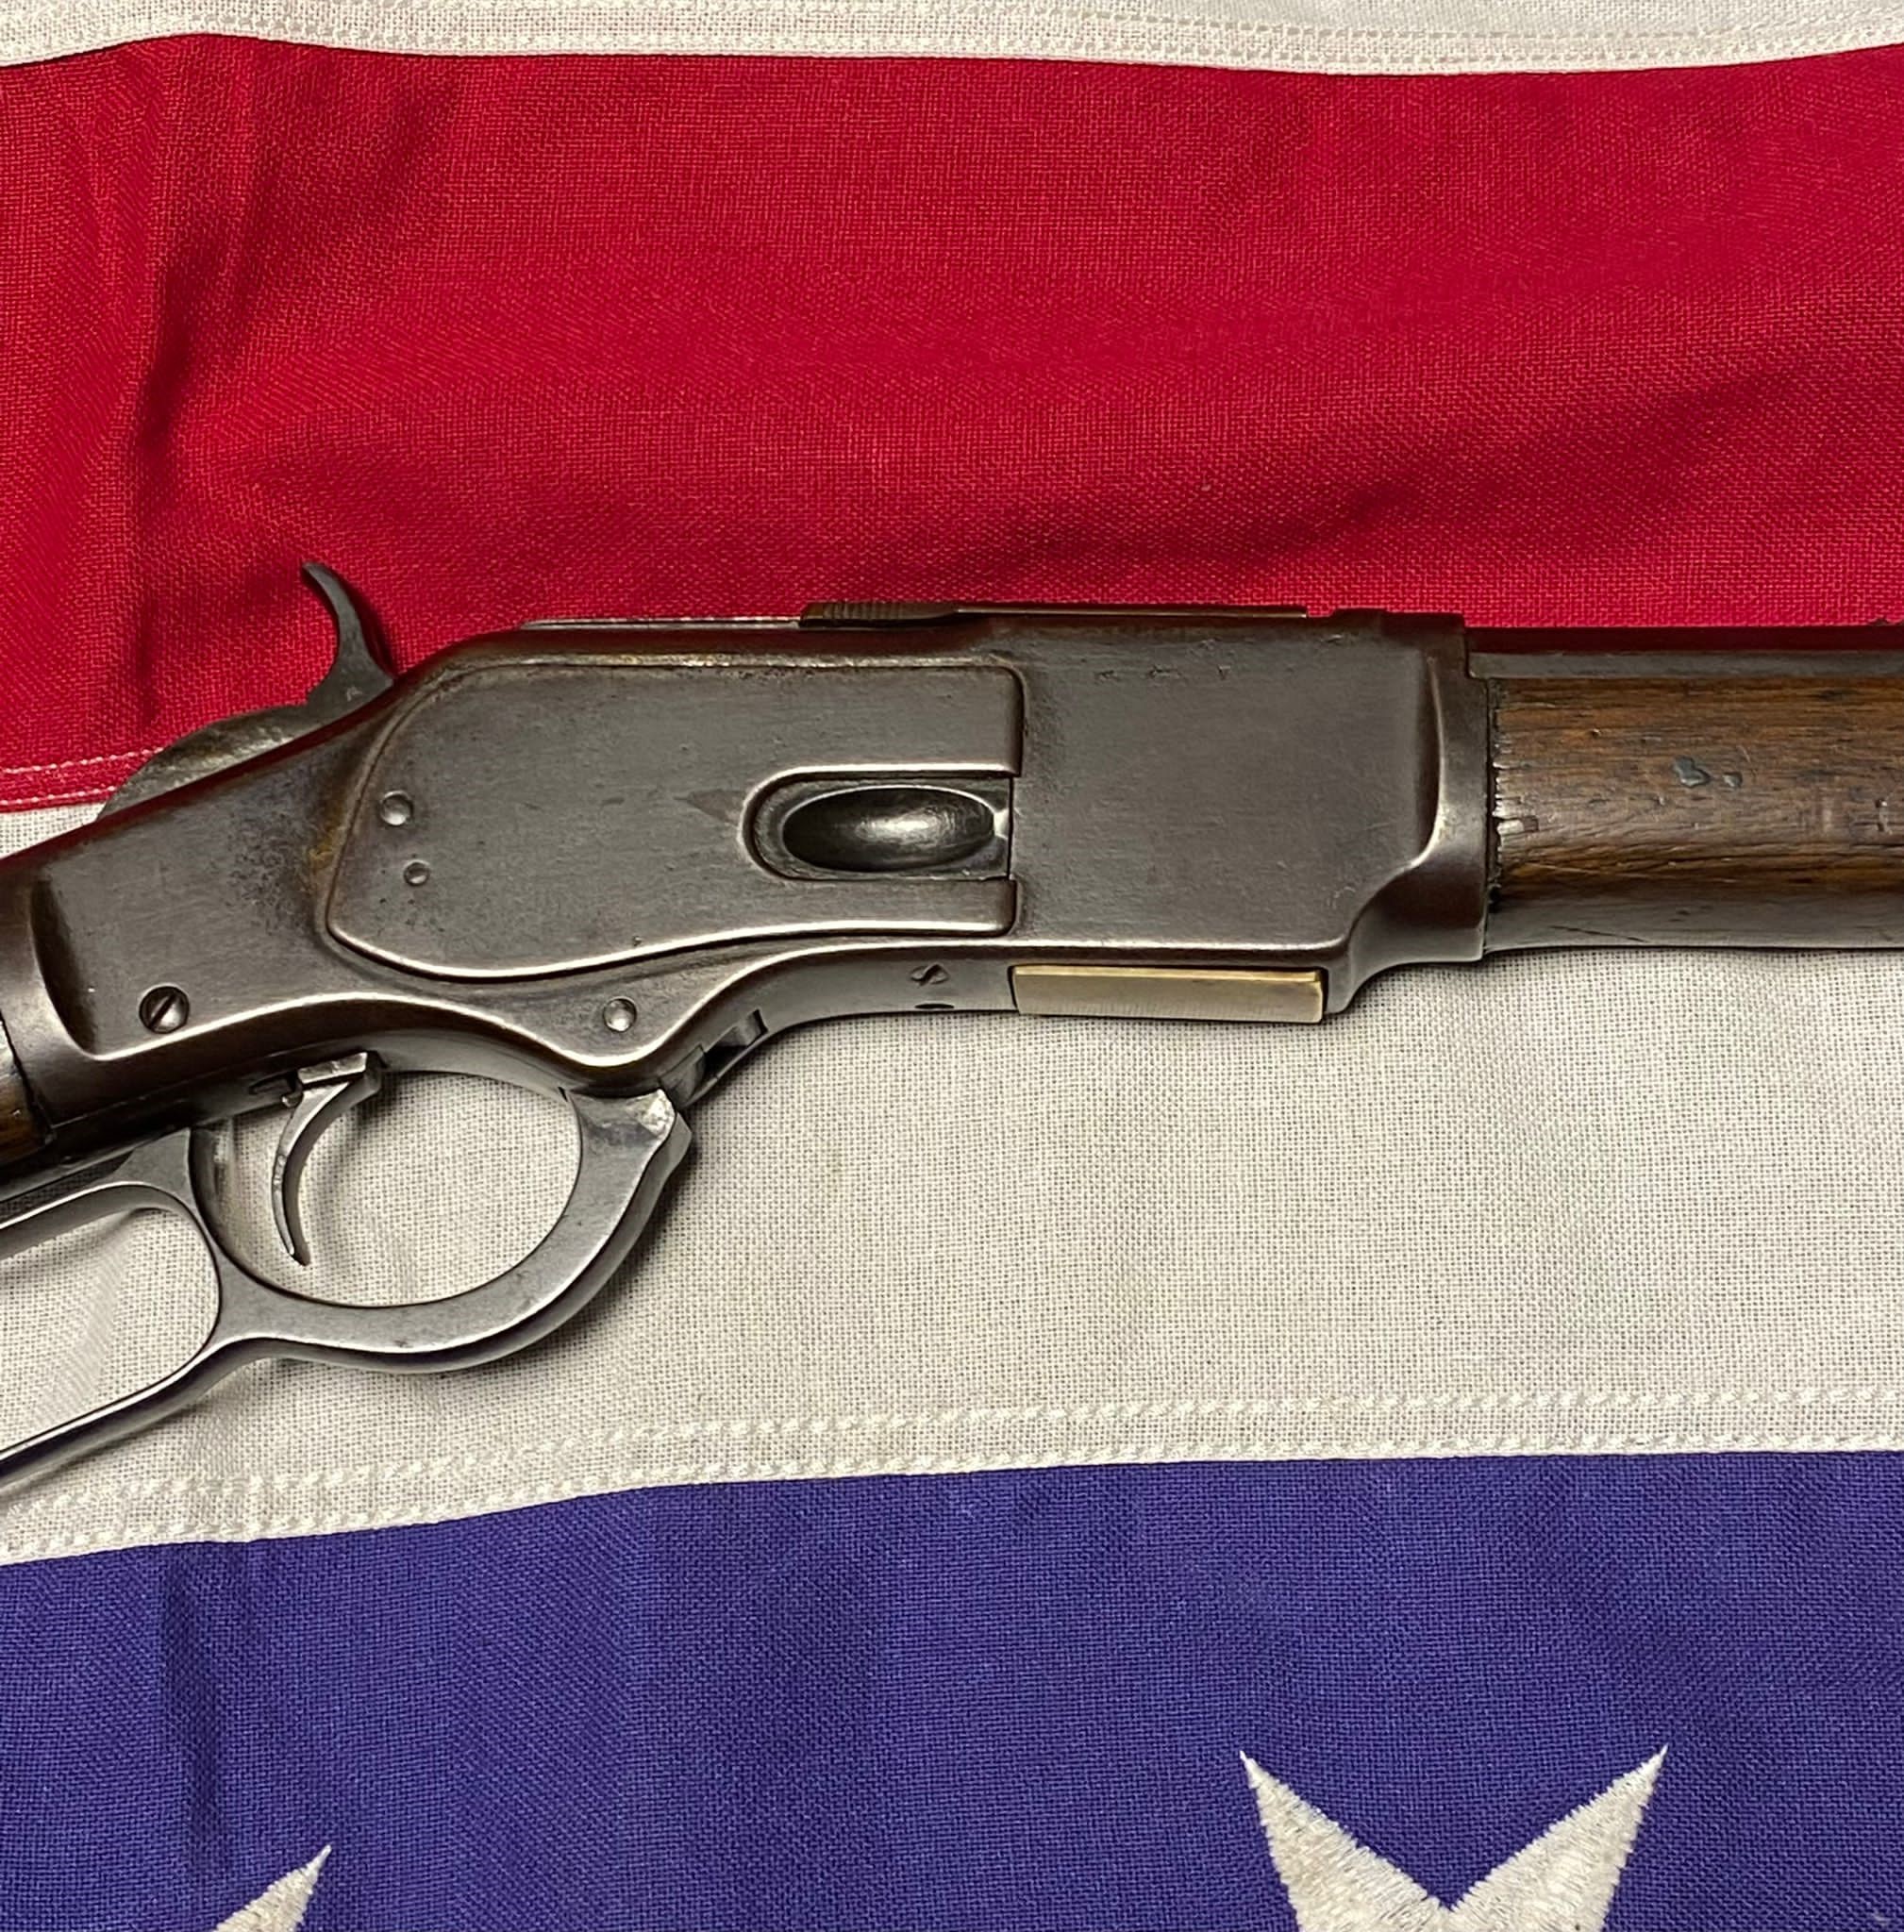 Winchester model 1873 in cal. 38/40 